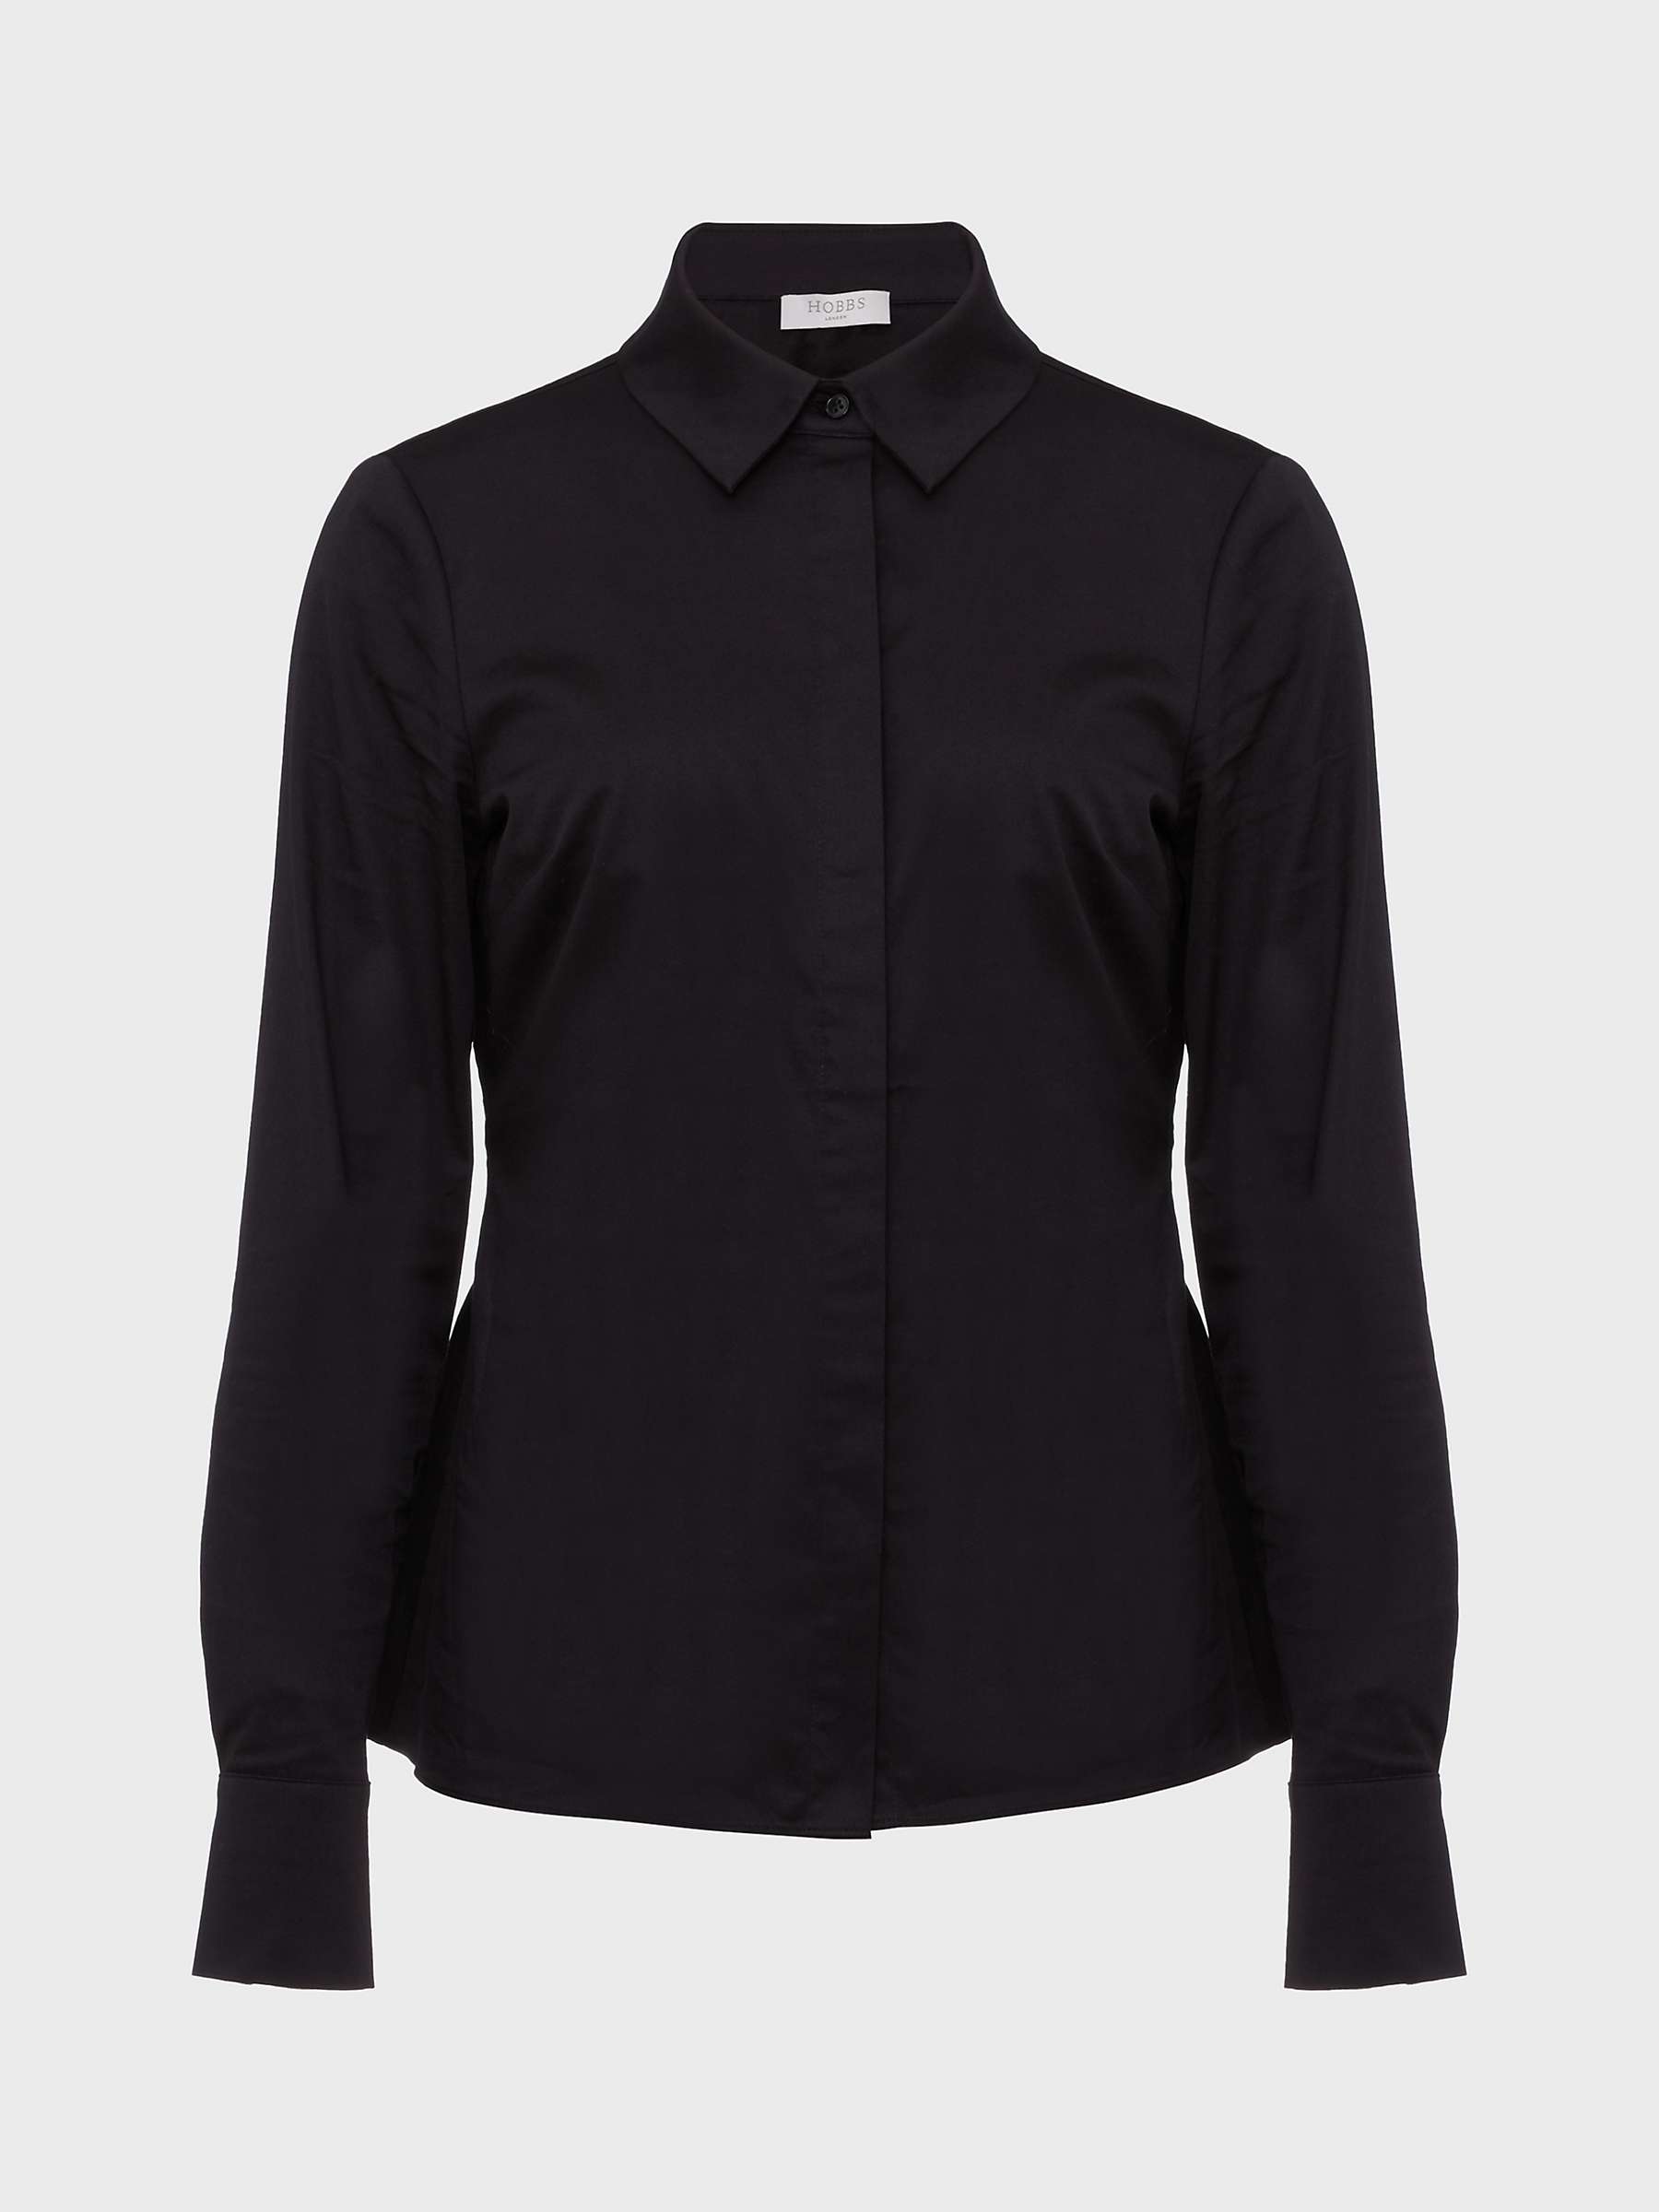 Hobbs Victoria Cotton Shirt, Black at John Lewis & Partners